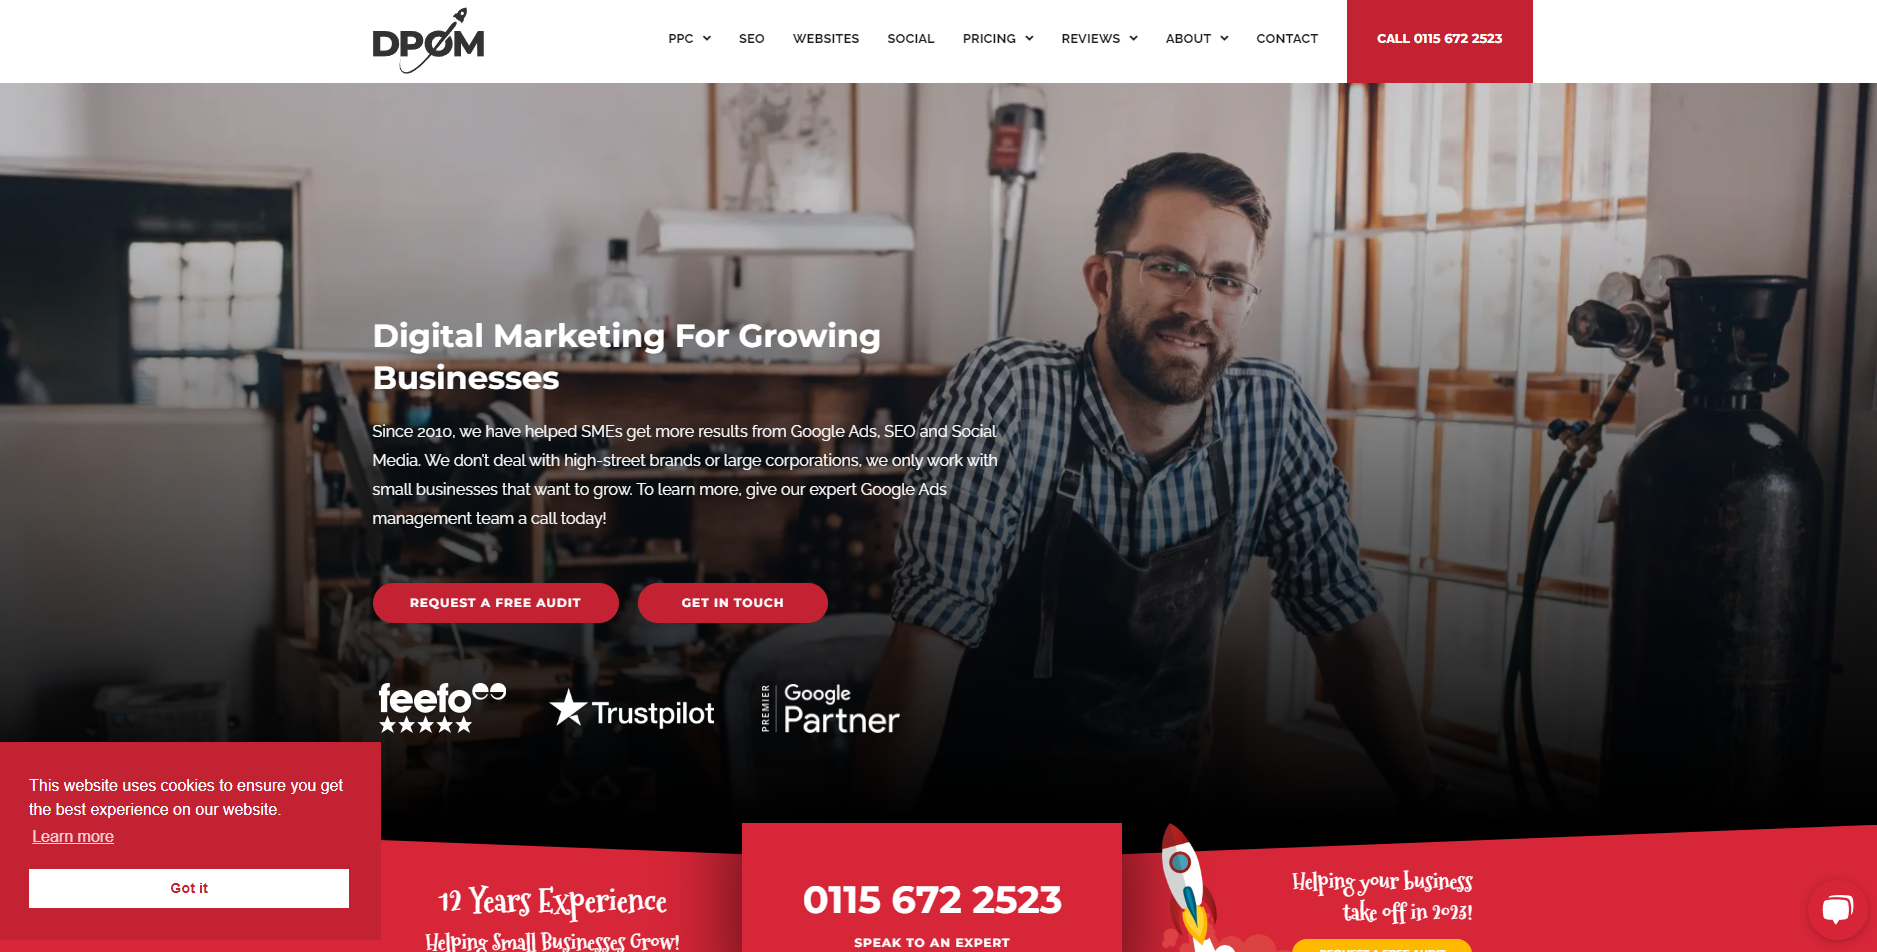 DPOM digital marketing for growing businesses